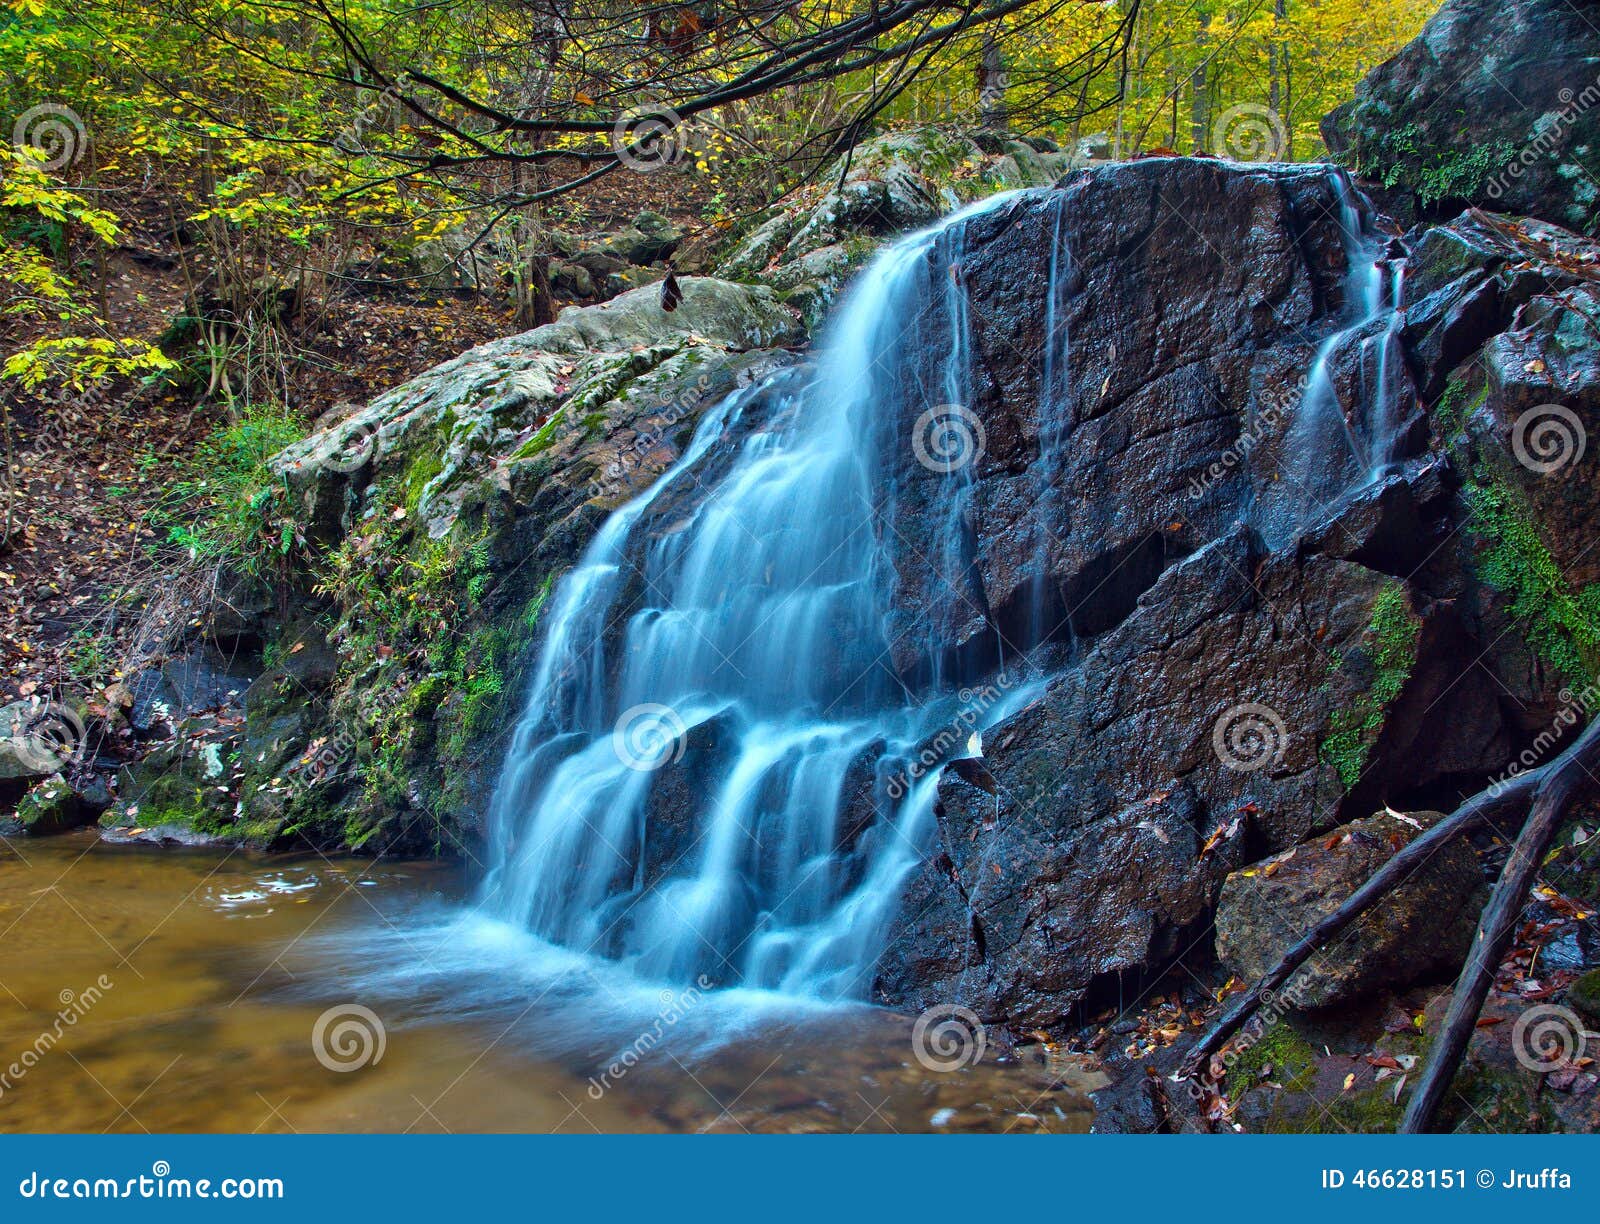 Cascading Woodland Waterfall And Fall Foliage Stock Image ...